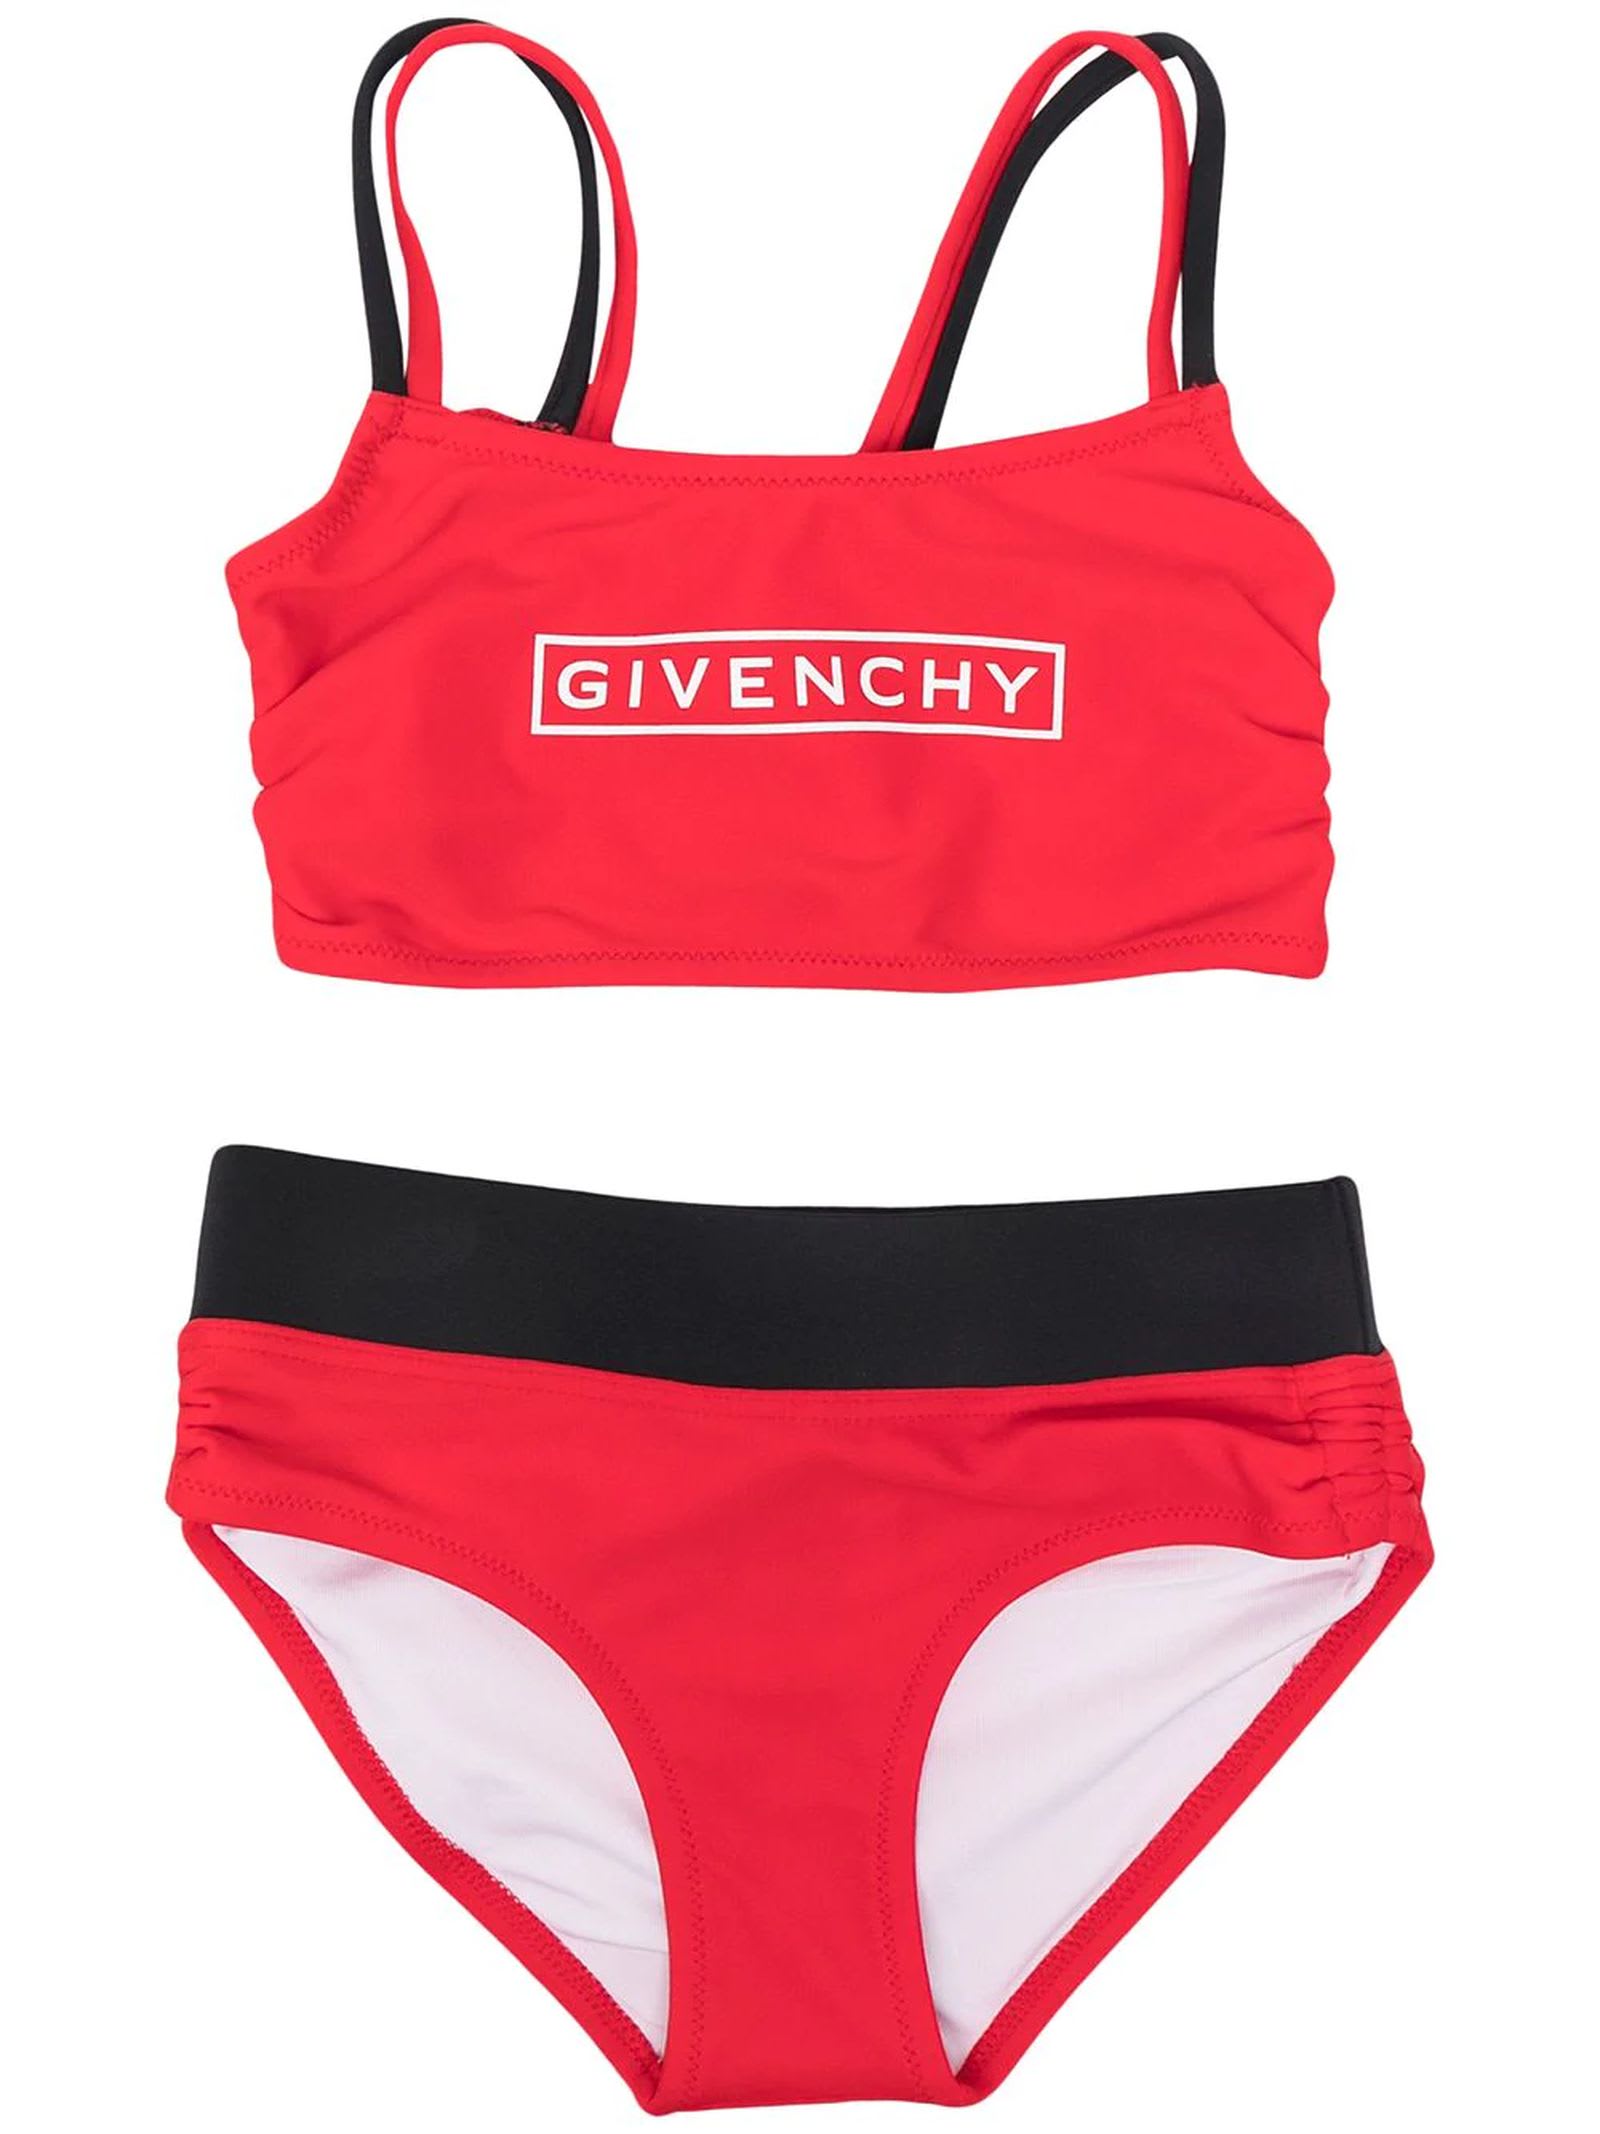 Givenchy Red And Black Bikini